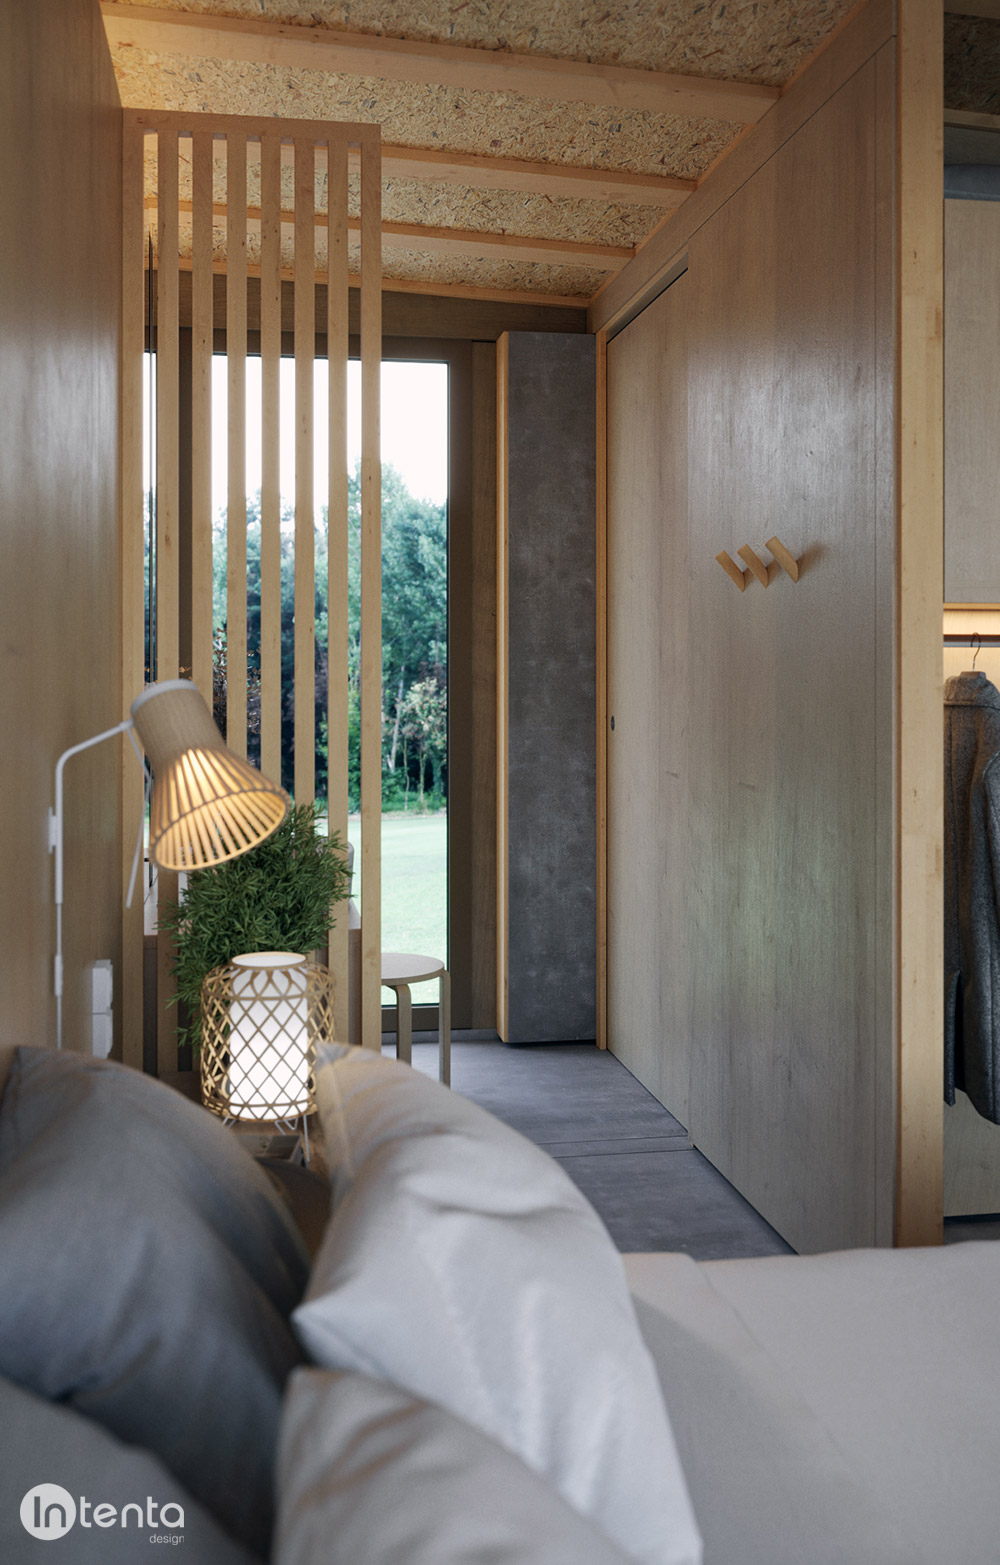 Sweet-box-modular-hotel-suite-in-tenta-design-10